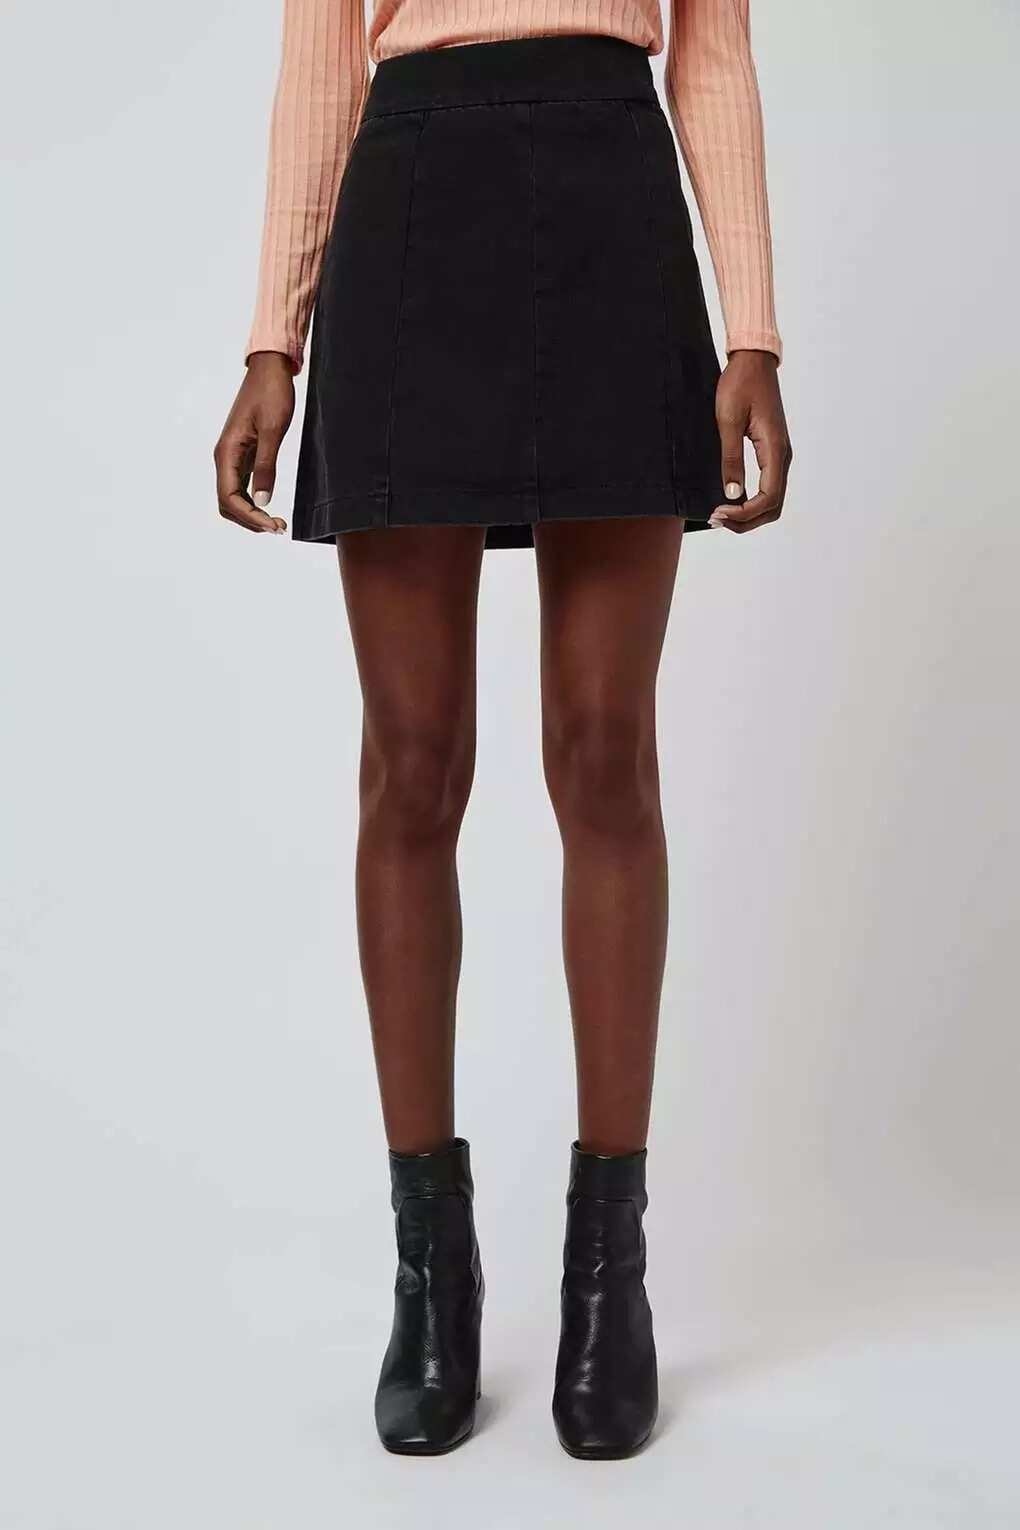 17 cool types of skirts Legit.ng